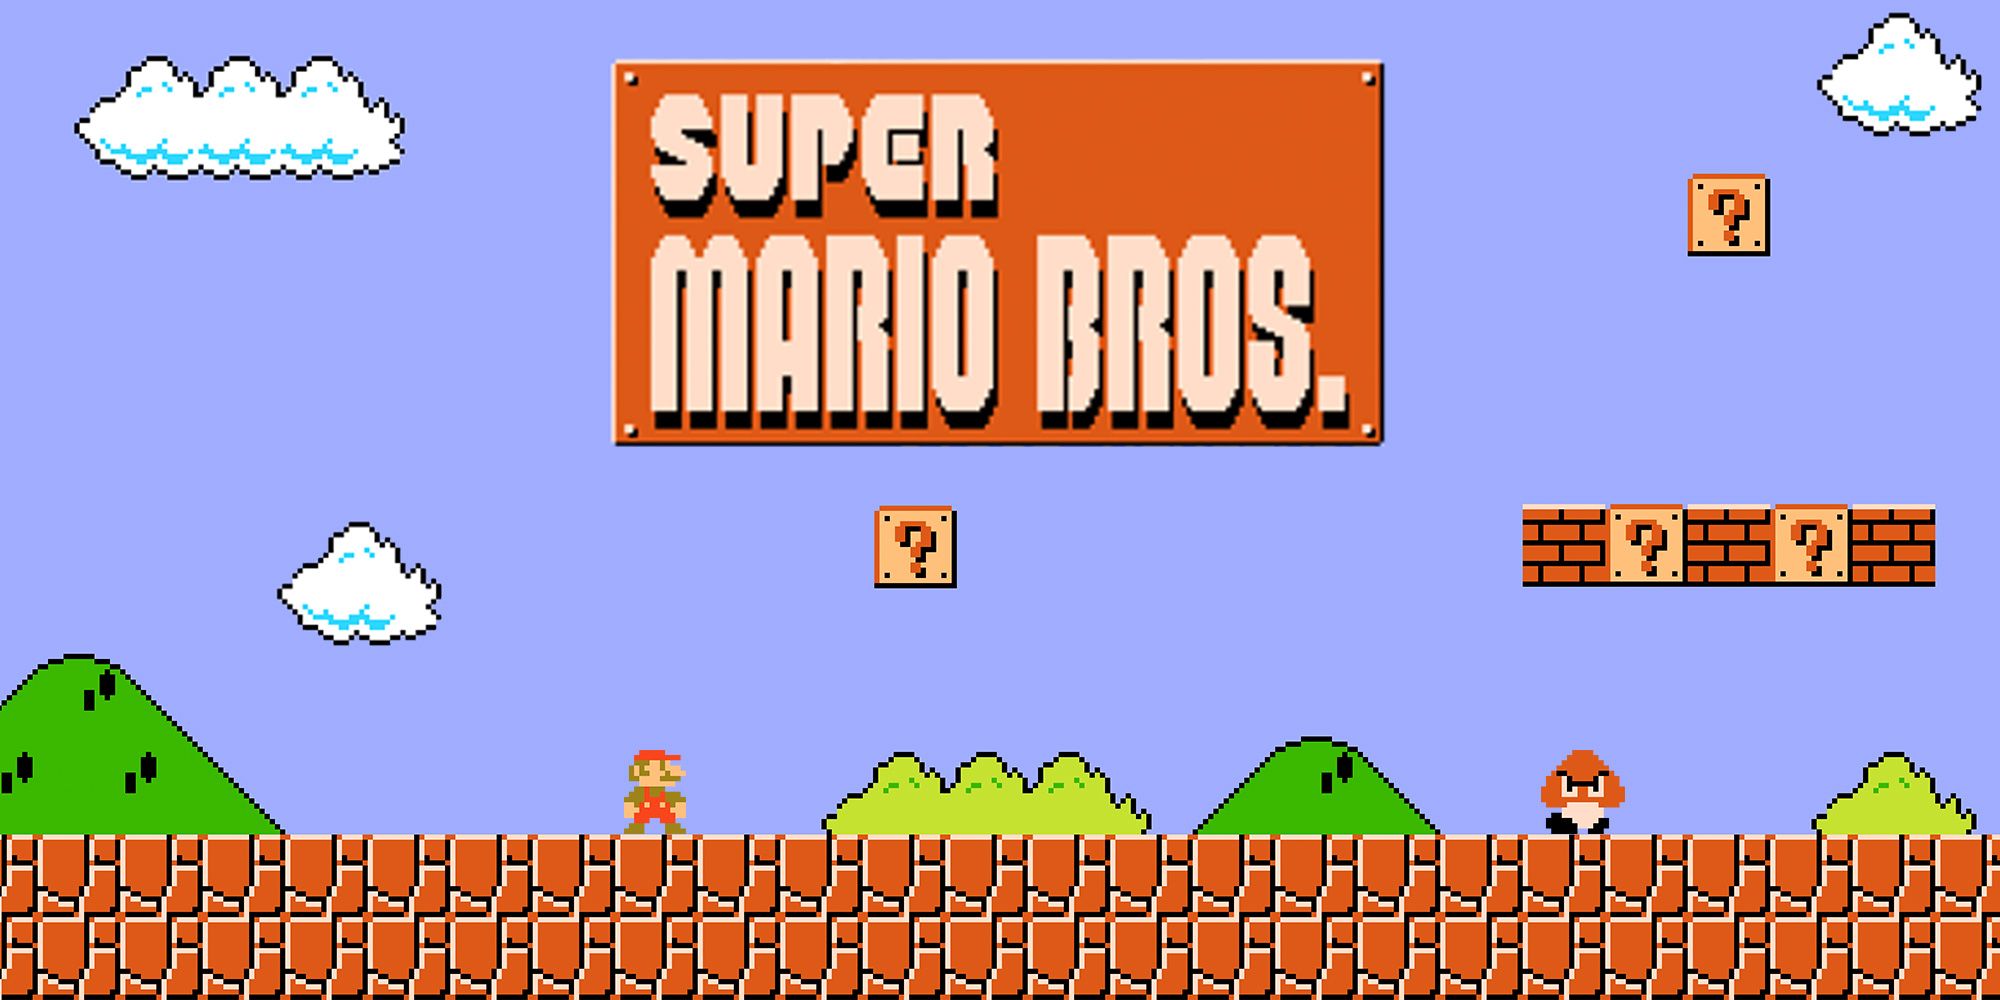 The start screen for Super Mario Bros.